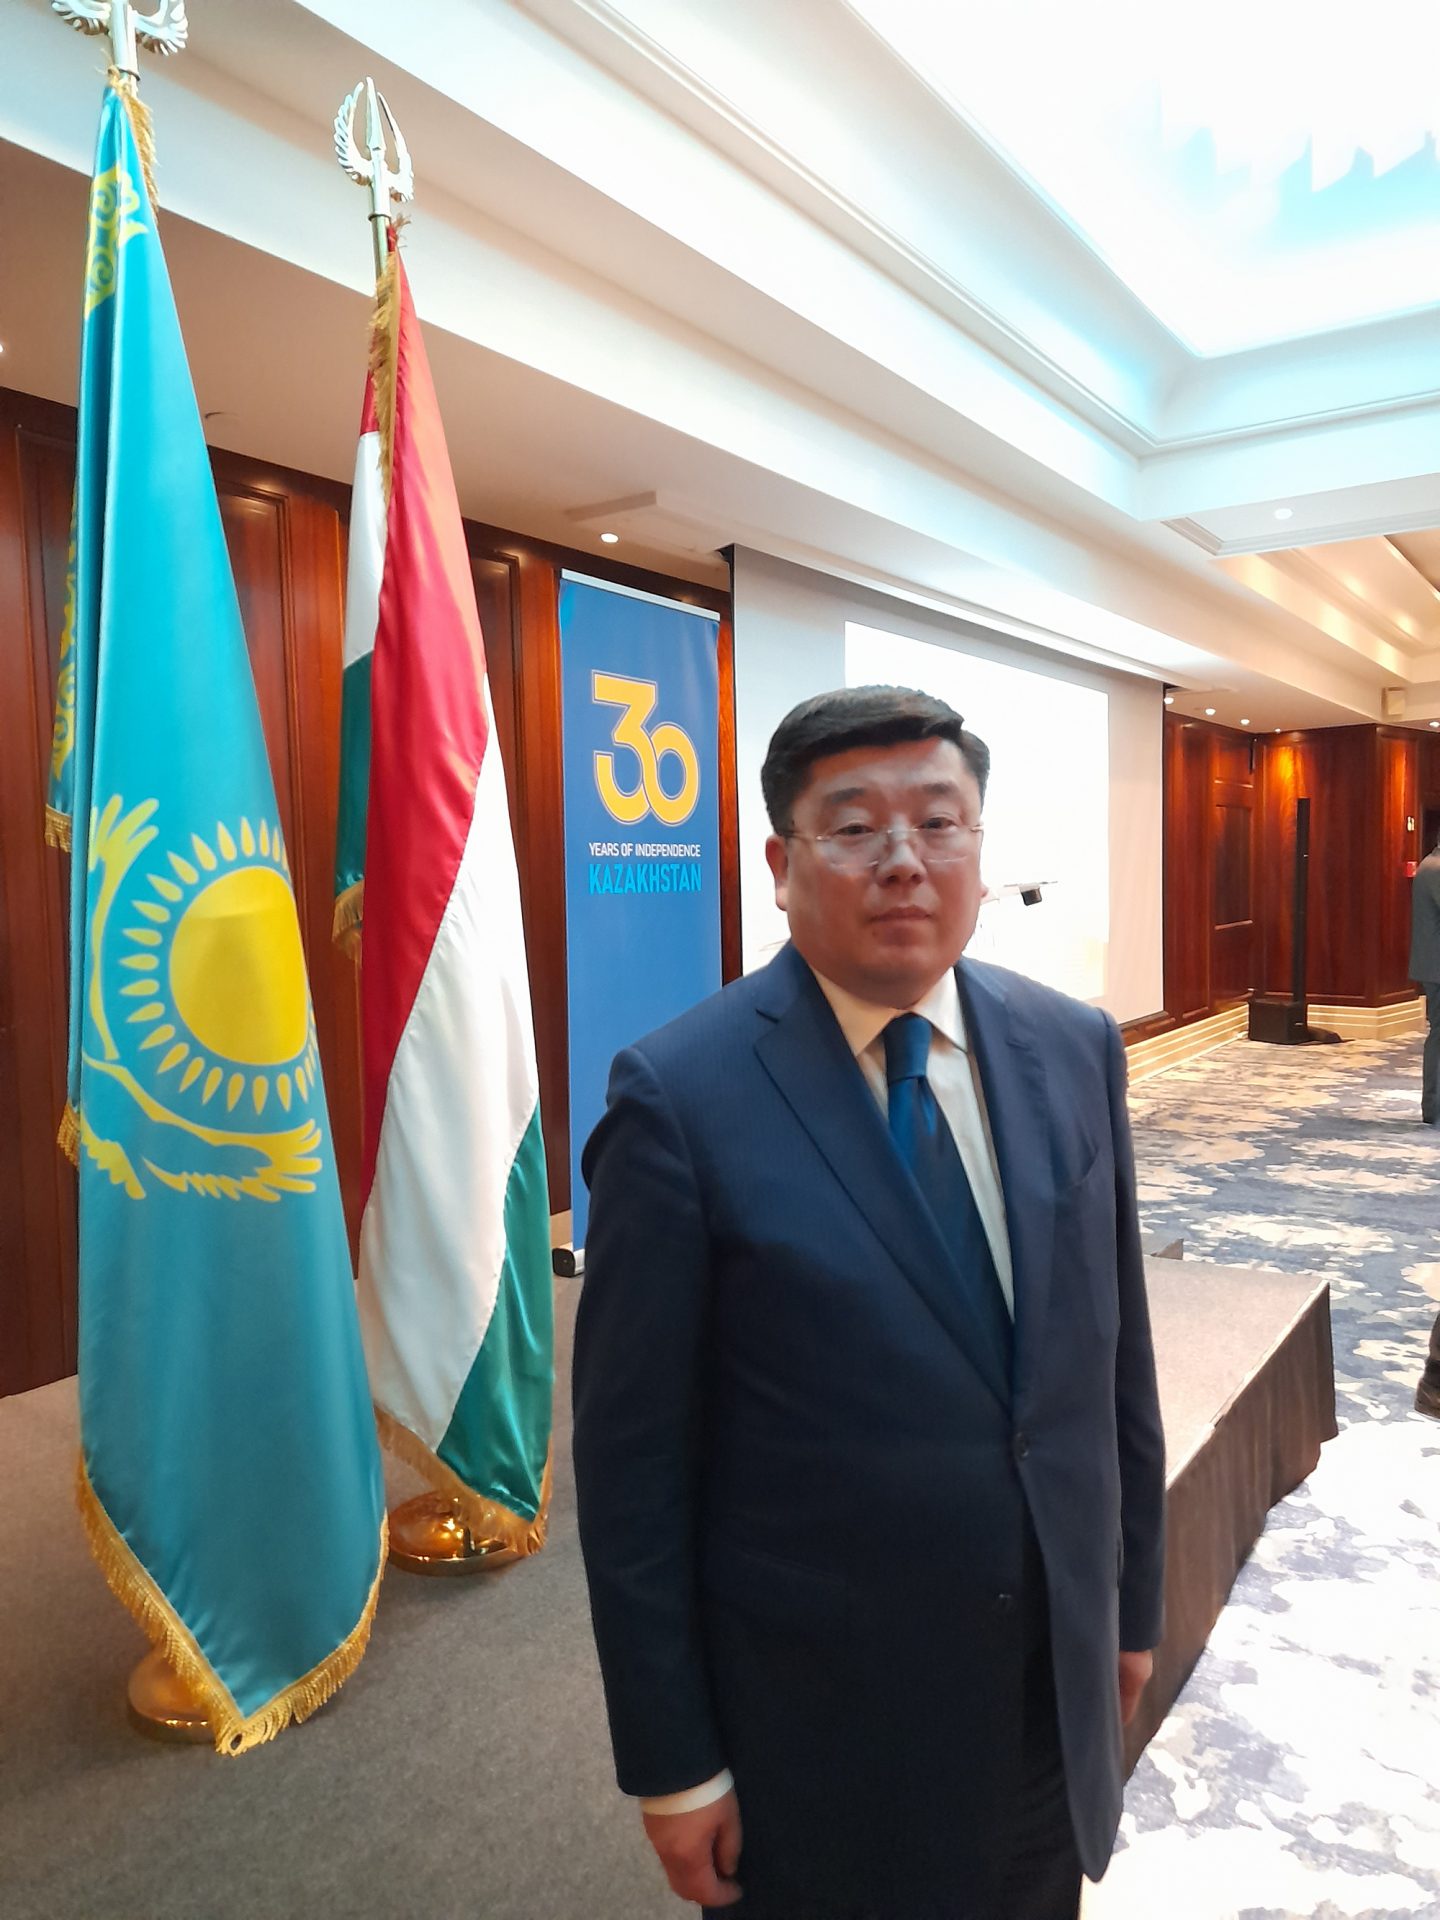 Kazakhstan ‘proud to have Hungary as strategic partner’